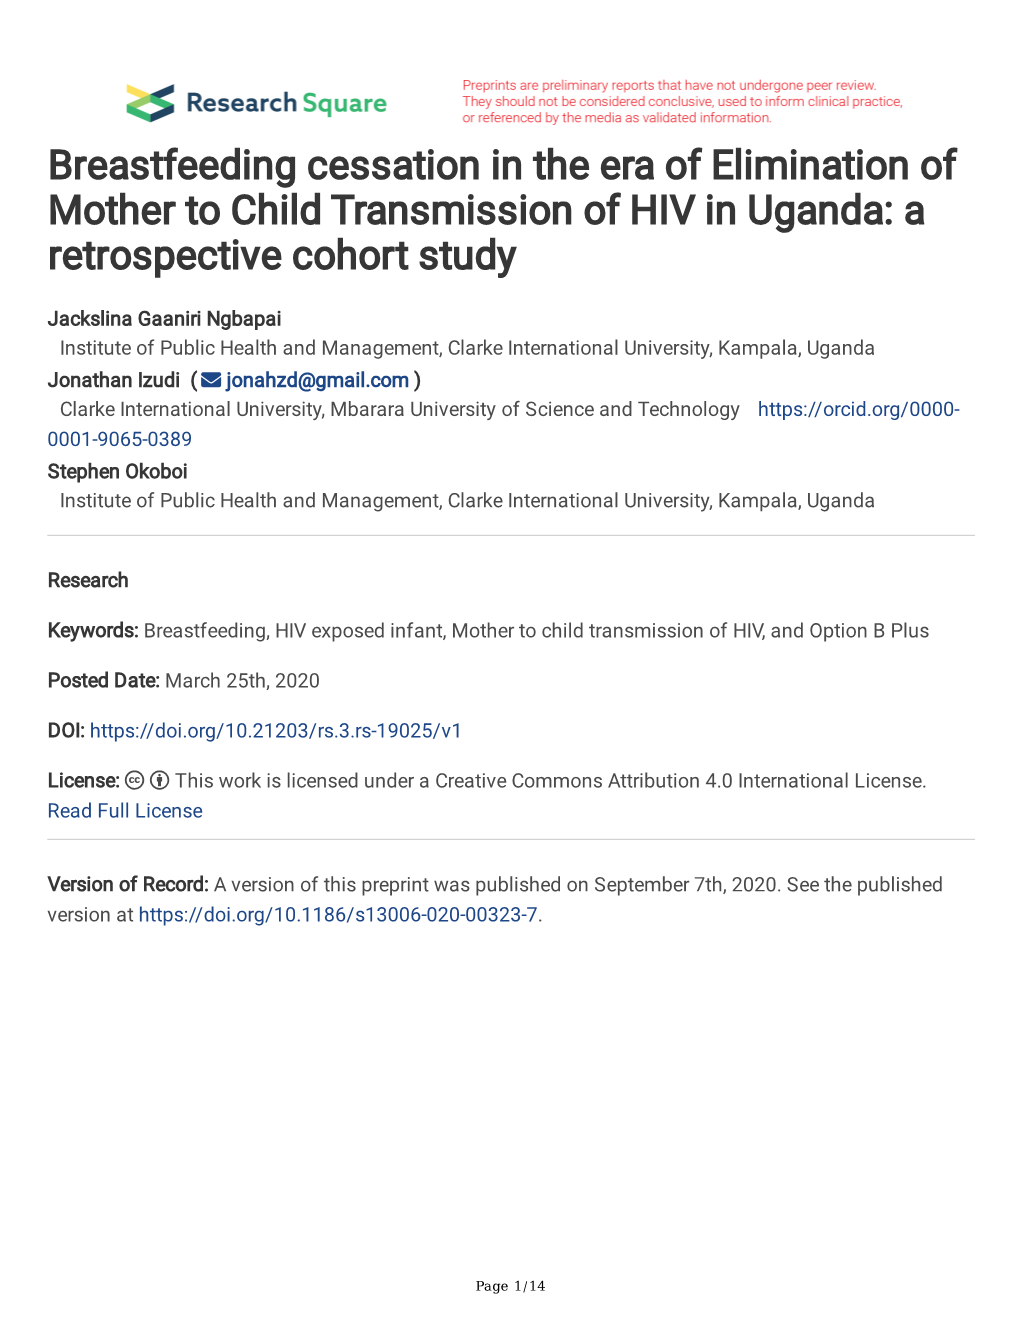 Breastfeeding Cessation in the Era of Elimination of Mother to Child Transmission of HIV in Uganda: a Retrospective Cohort Study